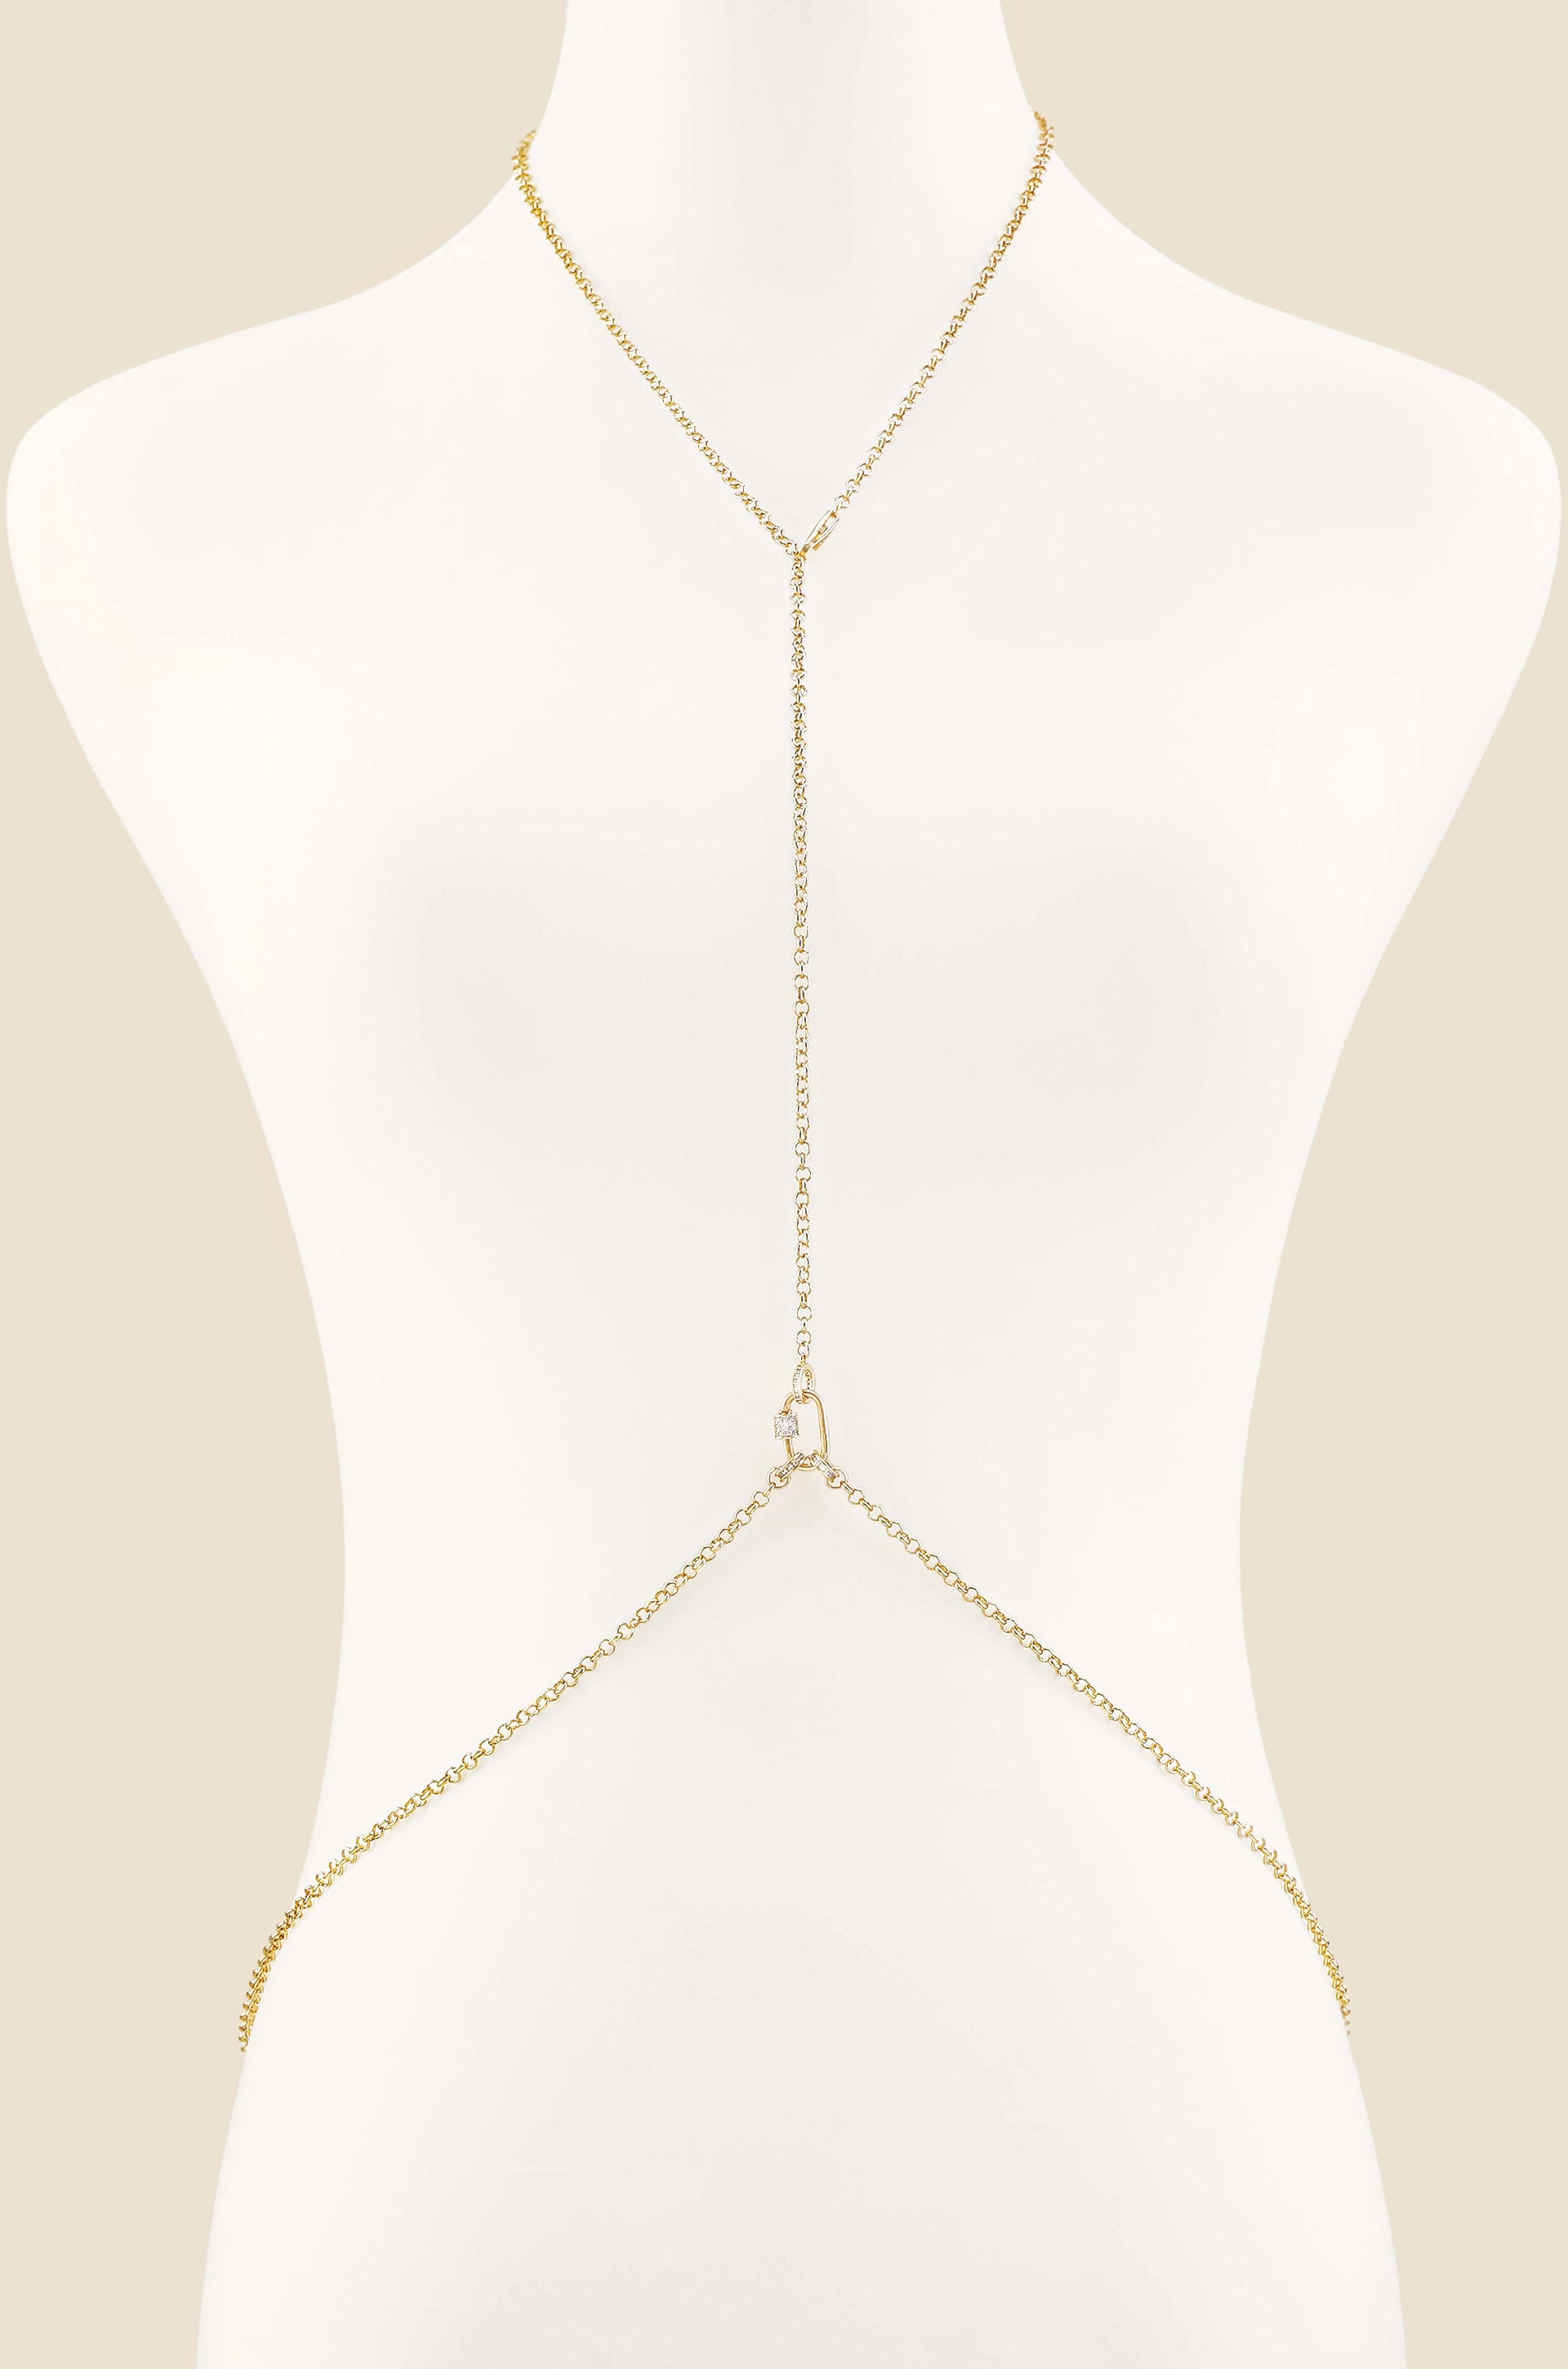 Crystal Rhinestone Bead Body Chain Harness Body Jewelry Bikini Bra Infinite  Personality Body Chain Accessories For Women And Girls (gold)